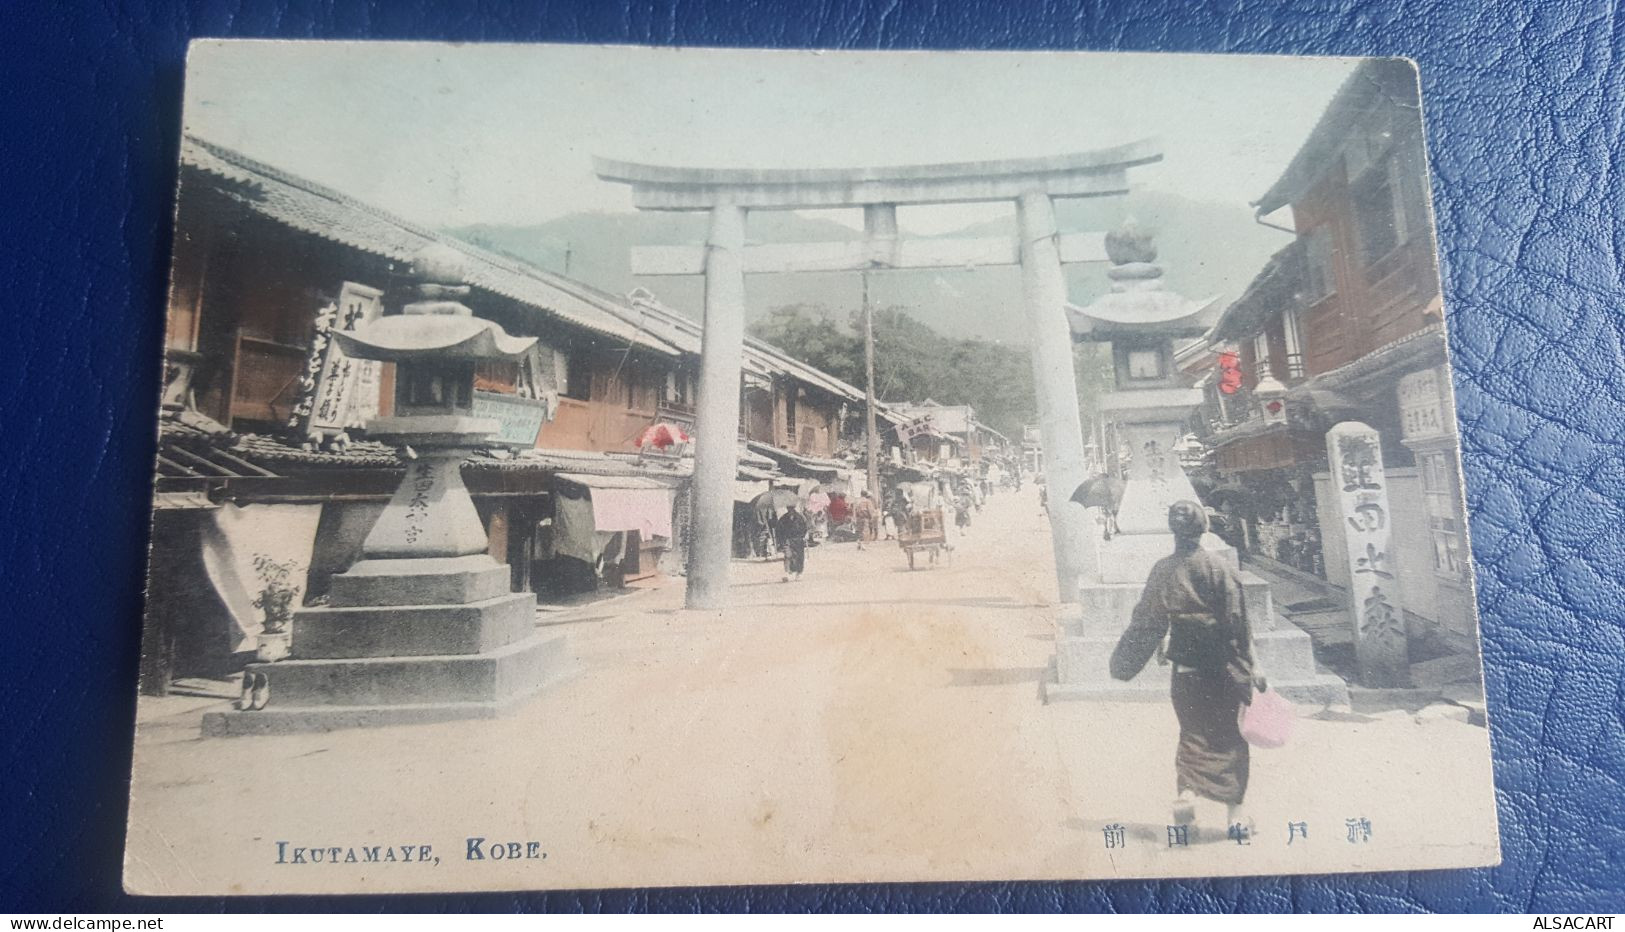 Kobe Ikutamaye , Japan - Kobe